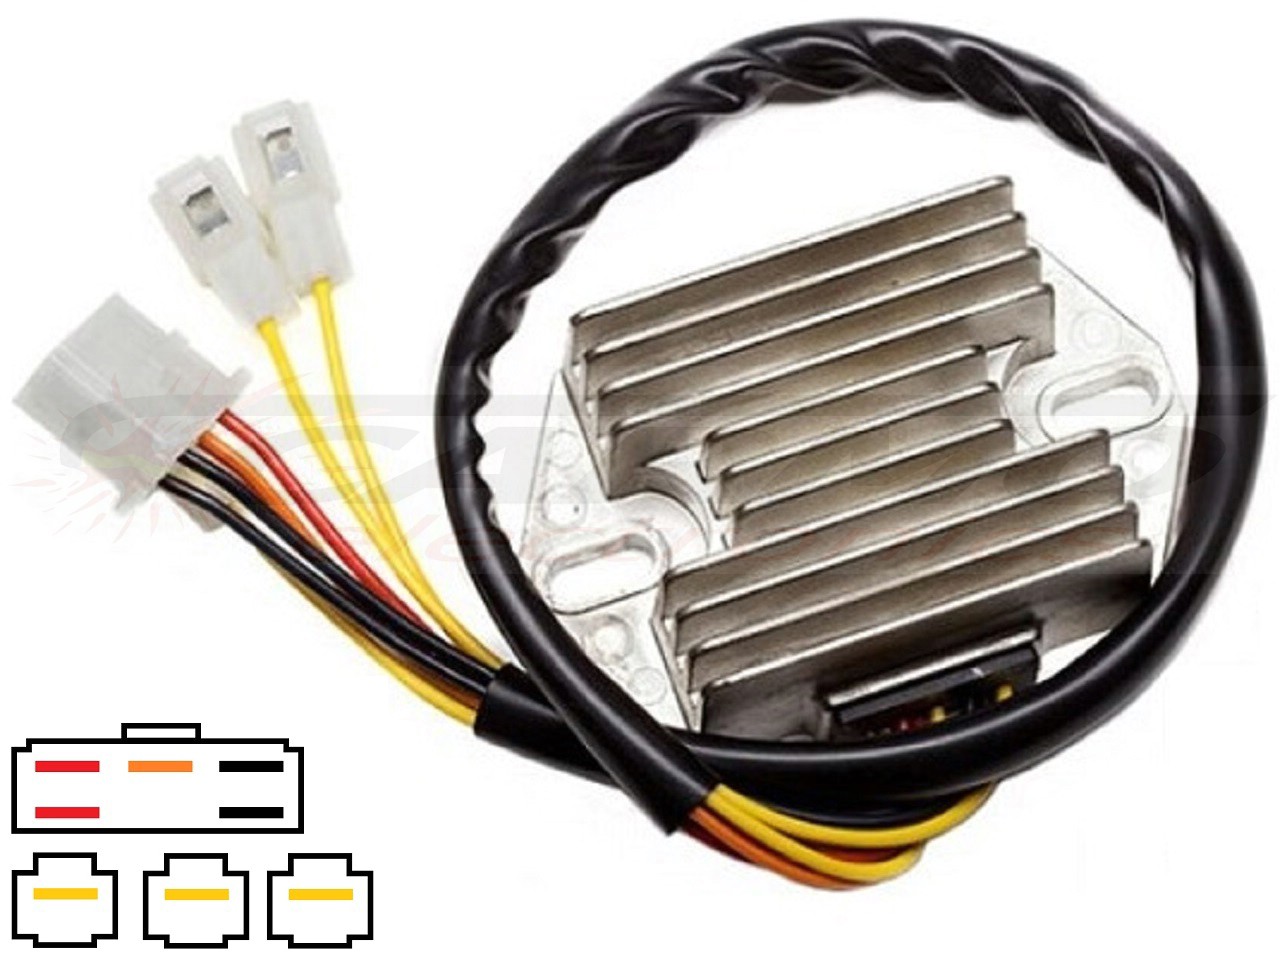 CARR751 Suzuki Intruder MOSFET Spanningsregelaar gelijkrichter - Clique na Imagem para Fechar